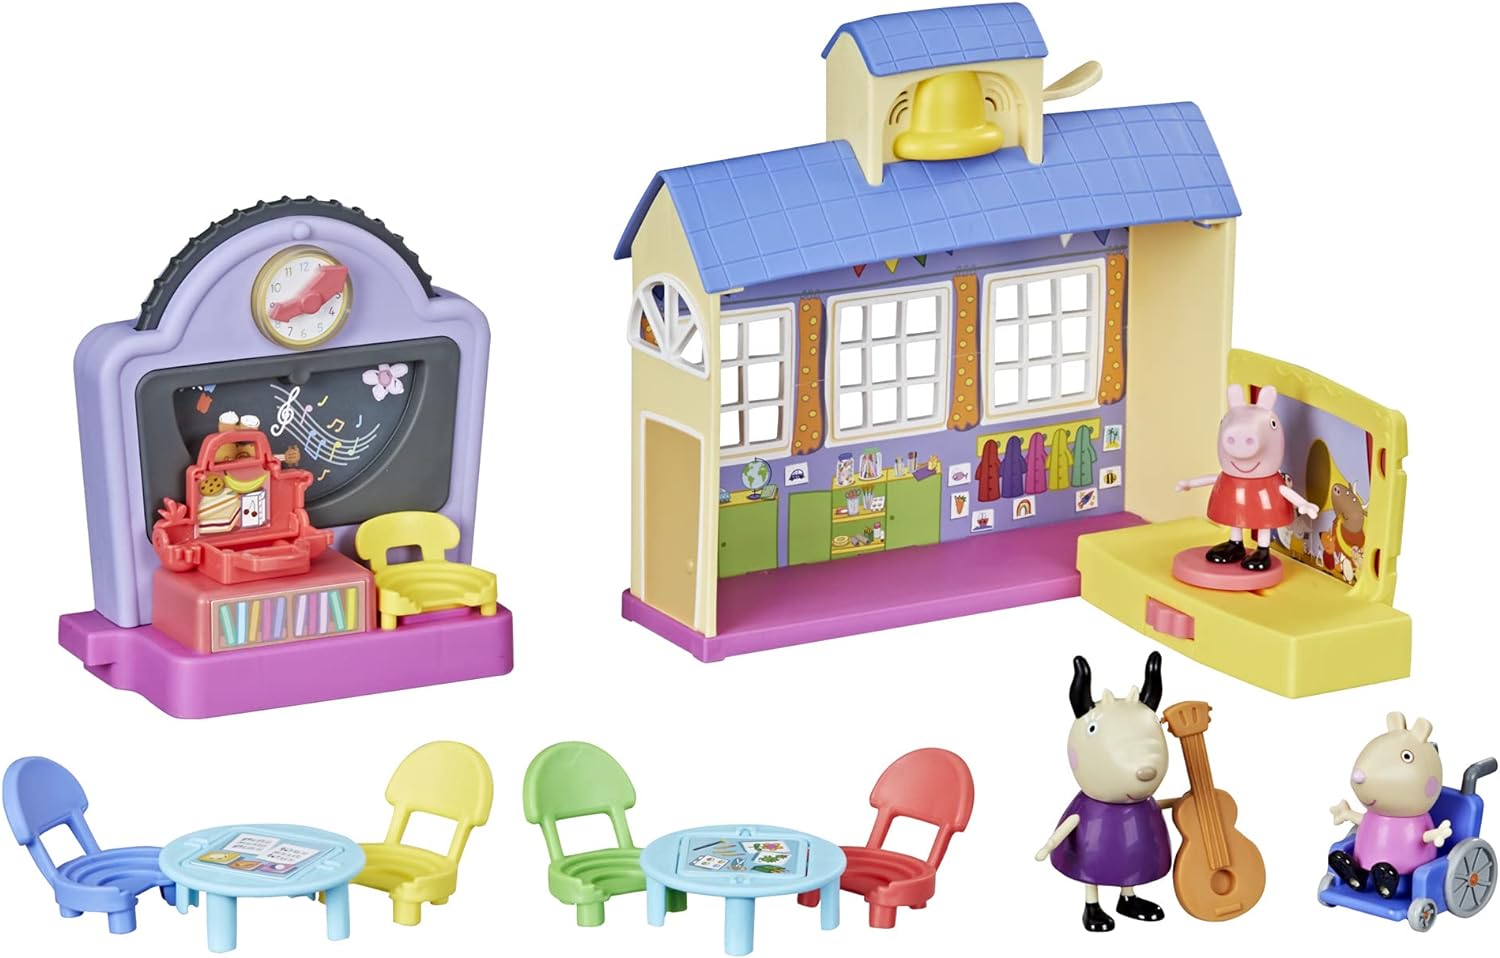 Peppa Pig Peppa's Adventures Peppas Play GroupPreschool Toy With Speech & Sound